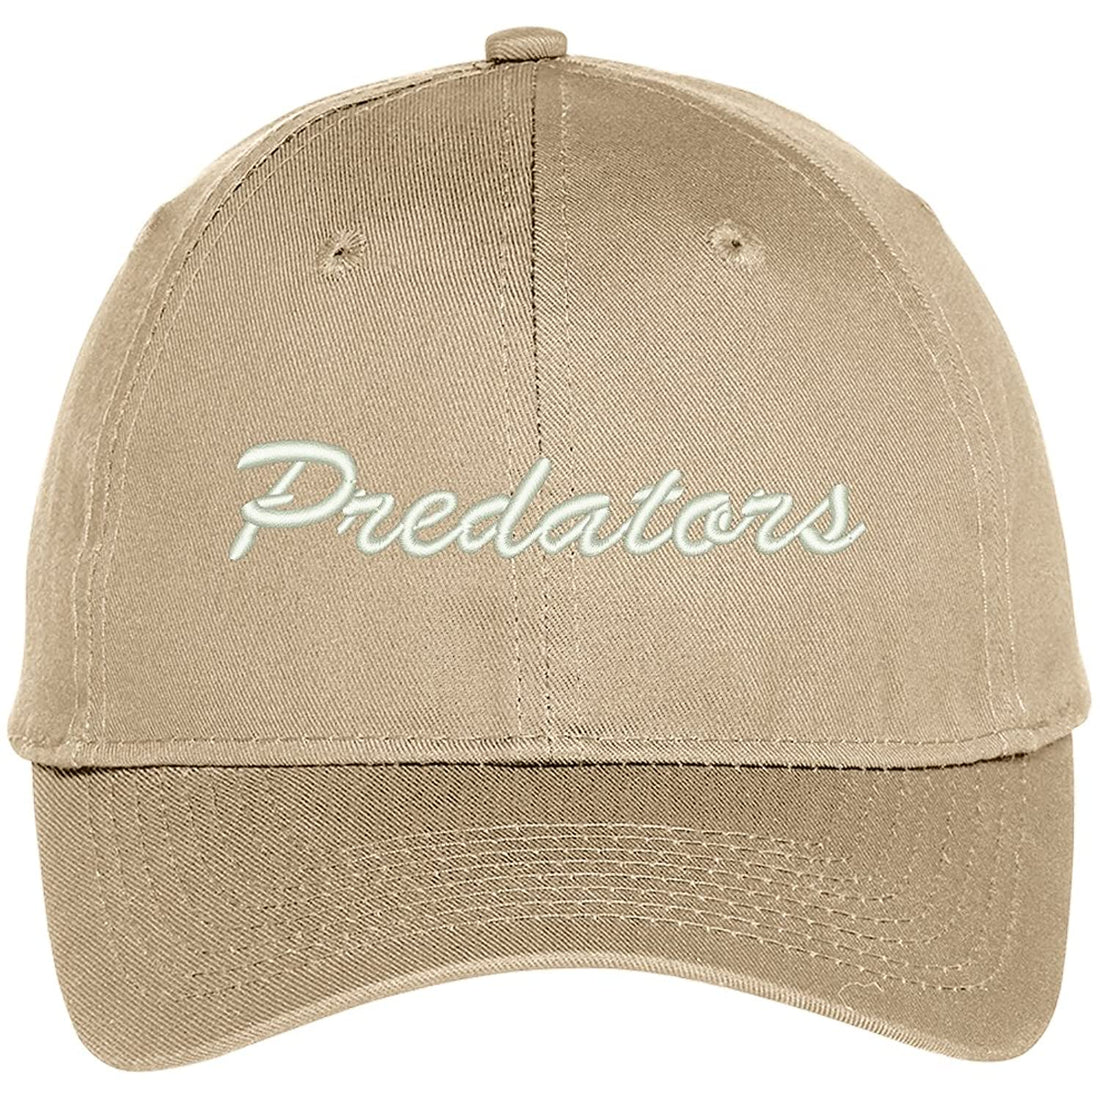 Trendy Apparel Shop Predators Embroidered Precurved Adjustable Cap